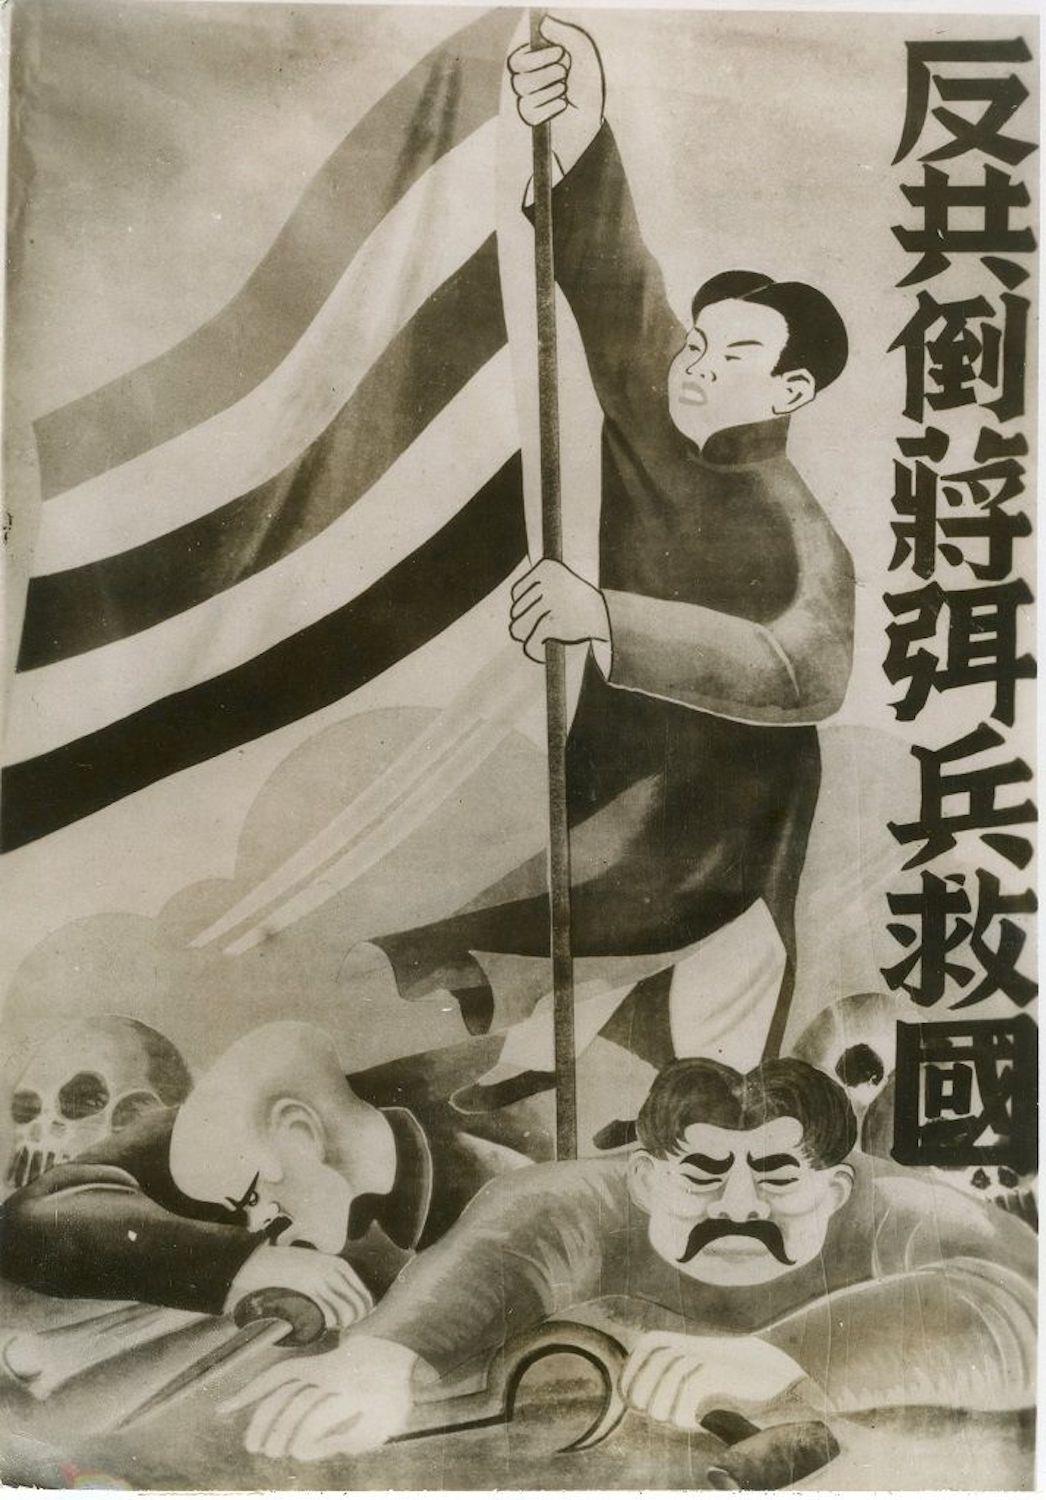 Unknown Landscape Photograph - Japanese propaganda in Beijing - Vintage Photo 1938